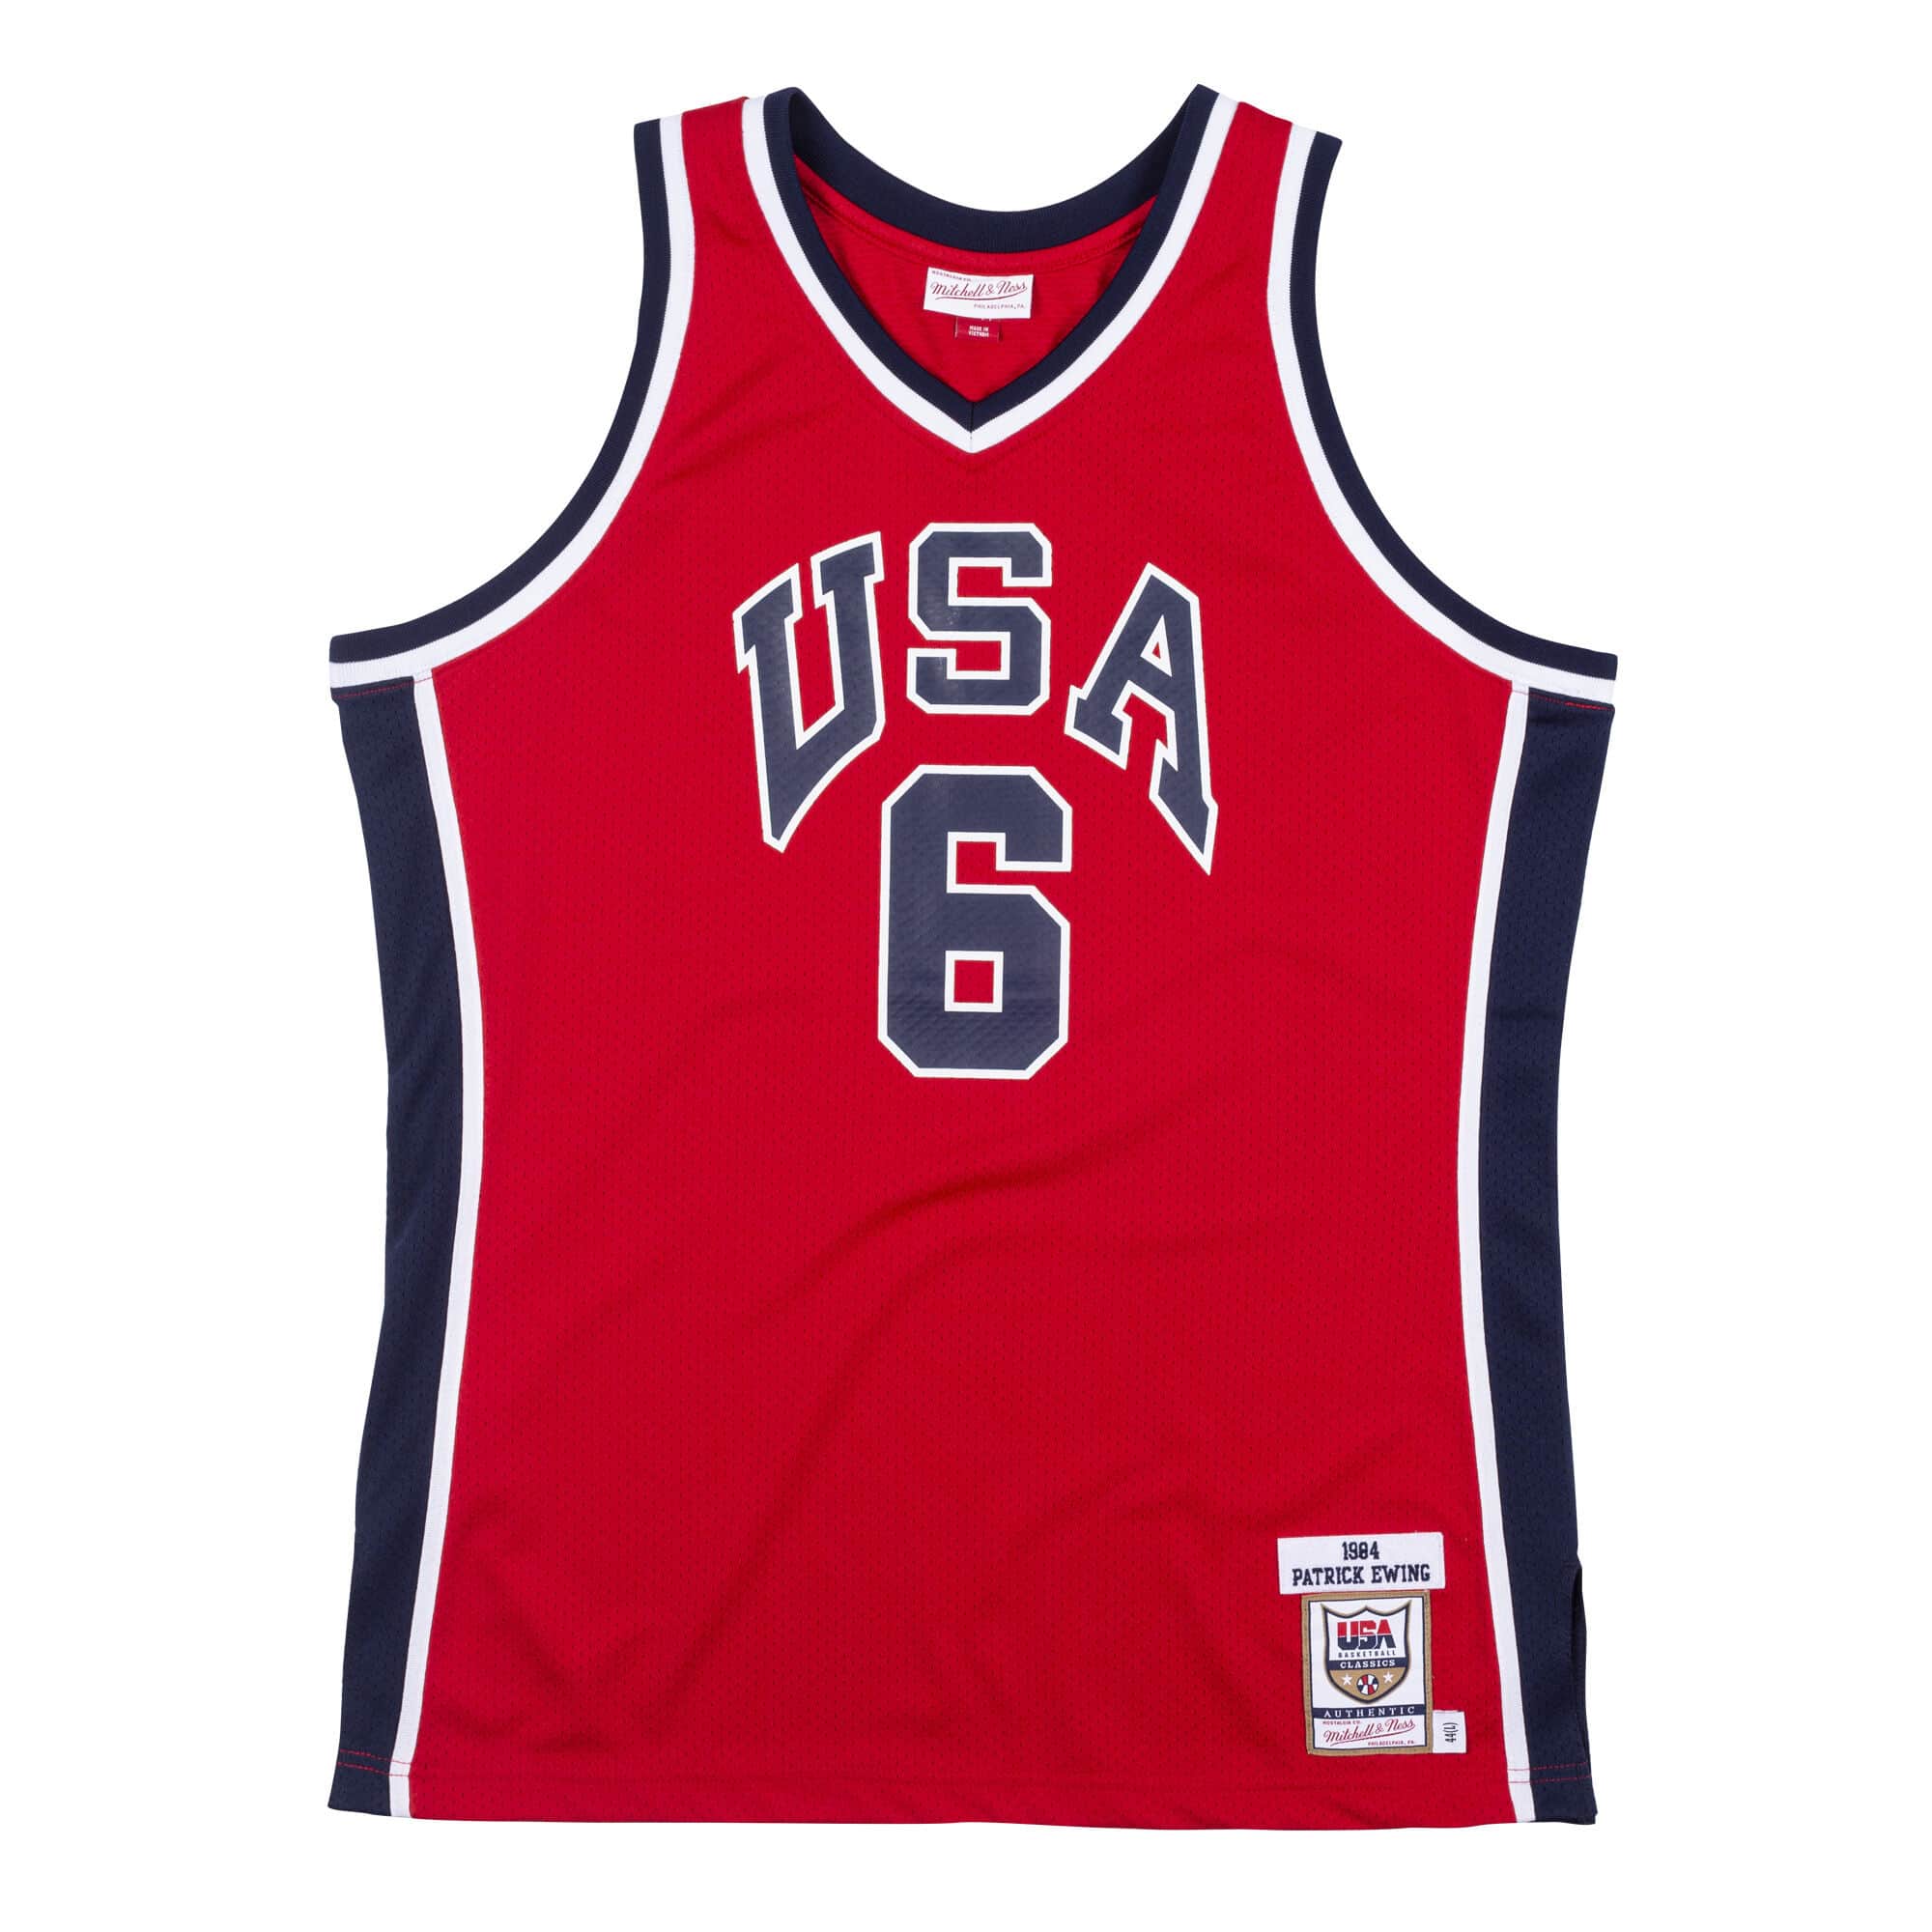 Jersey Team USA 1984 Patrick Ewing